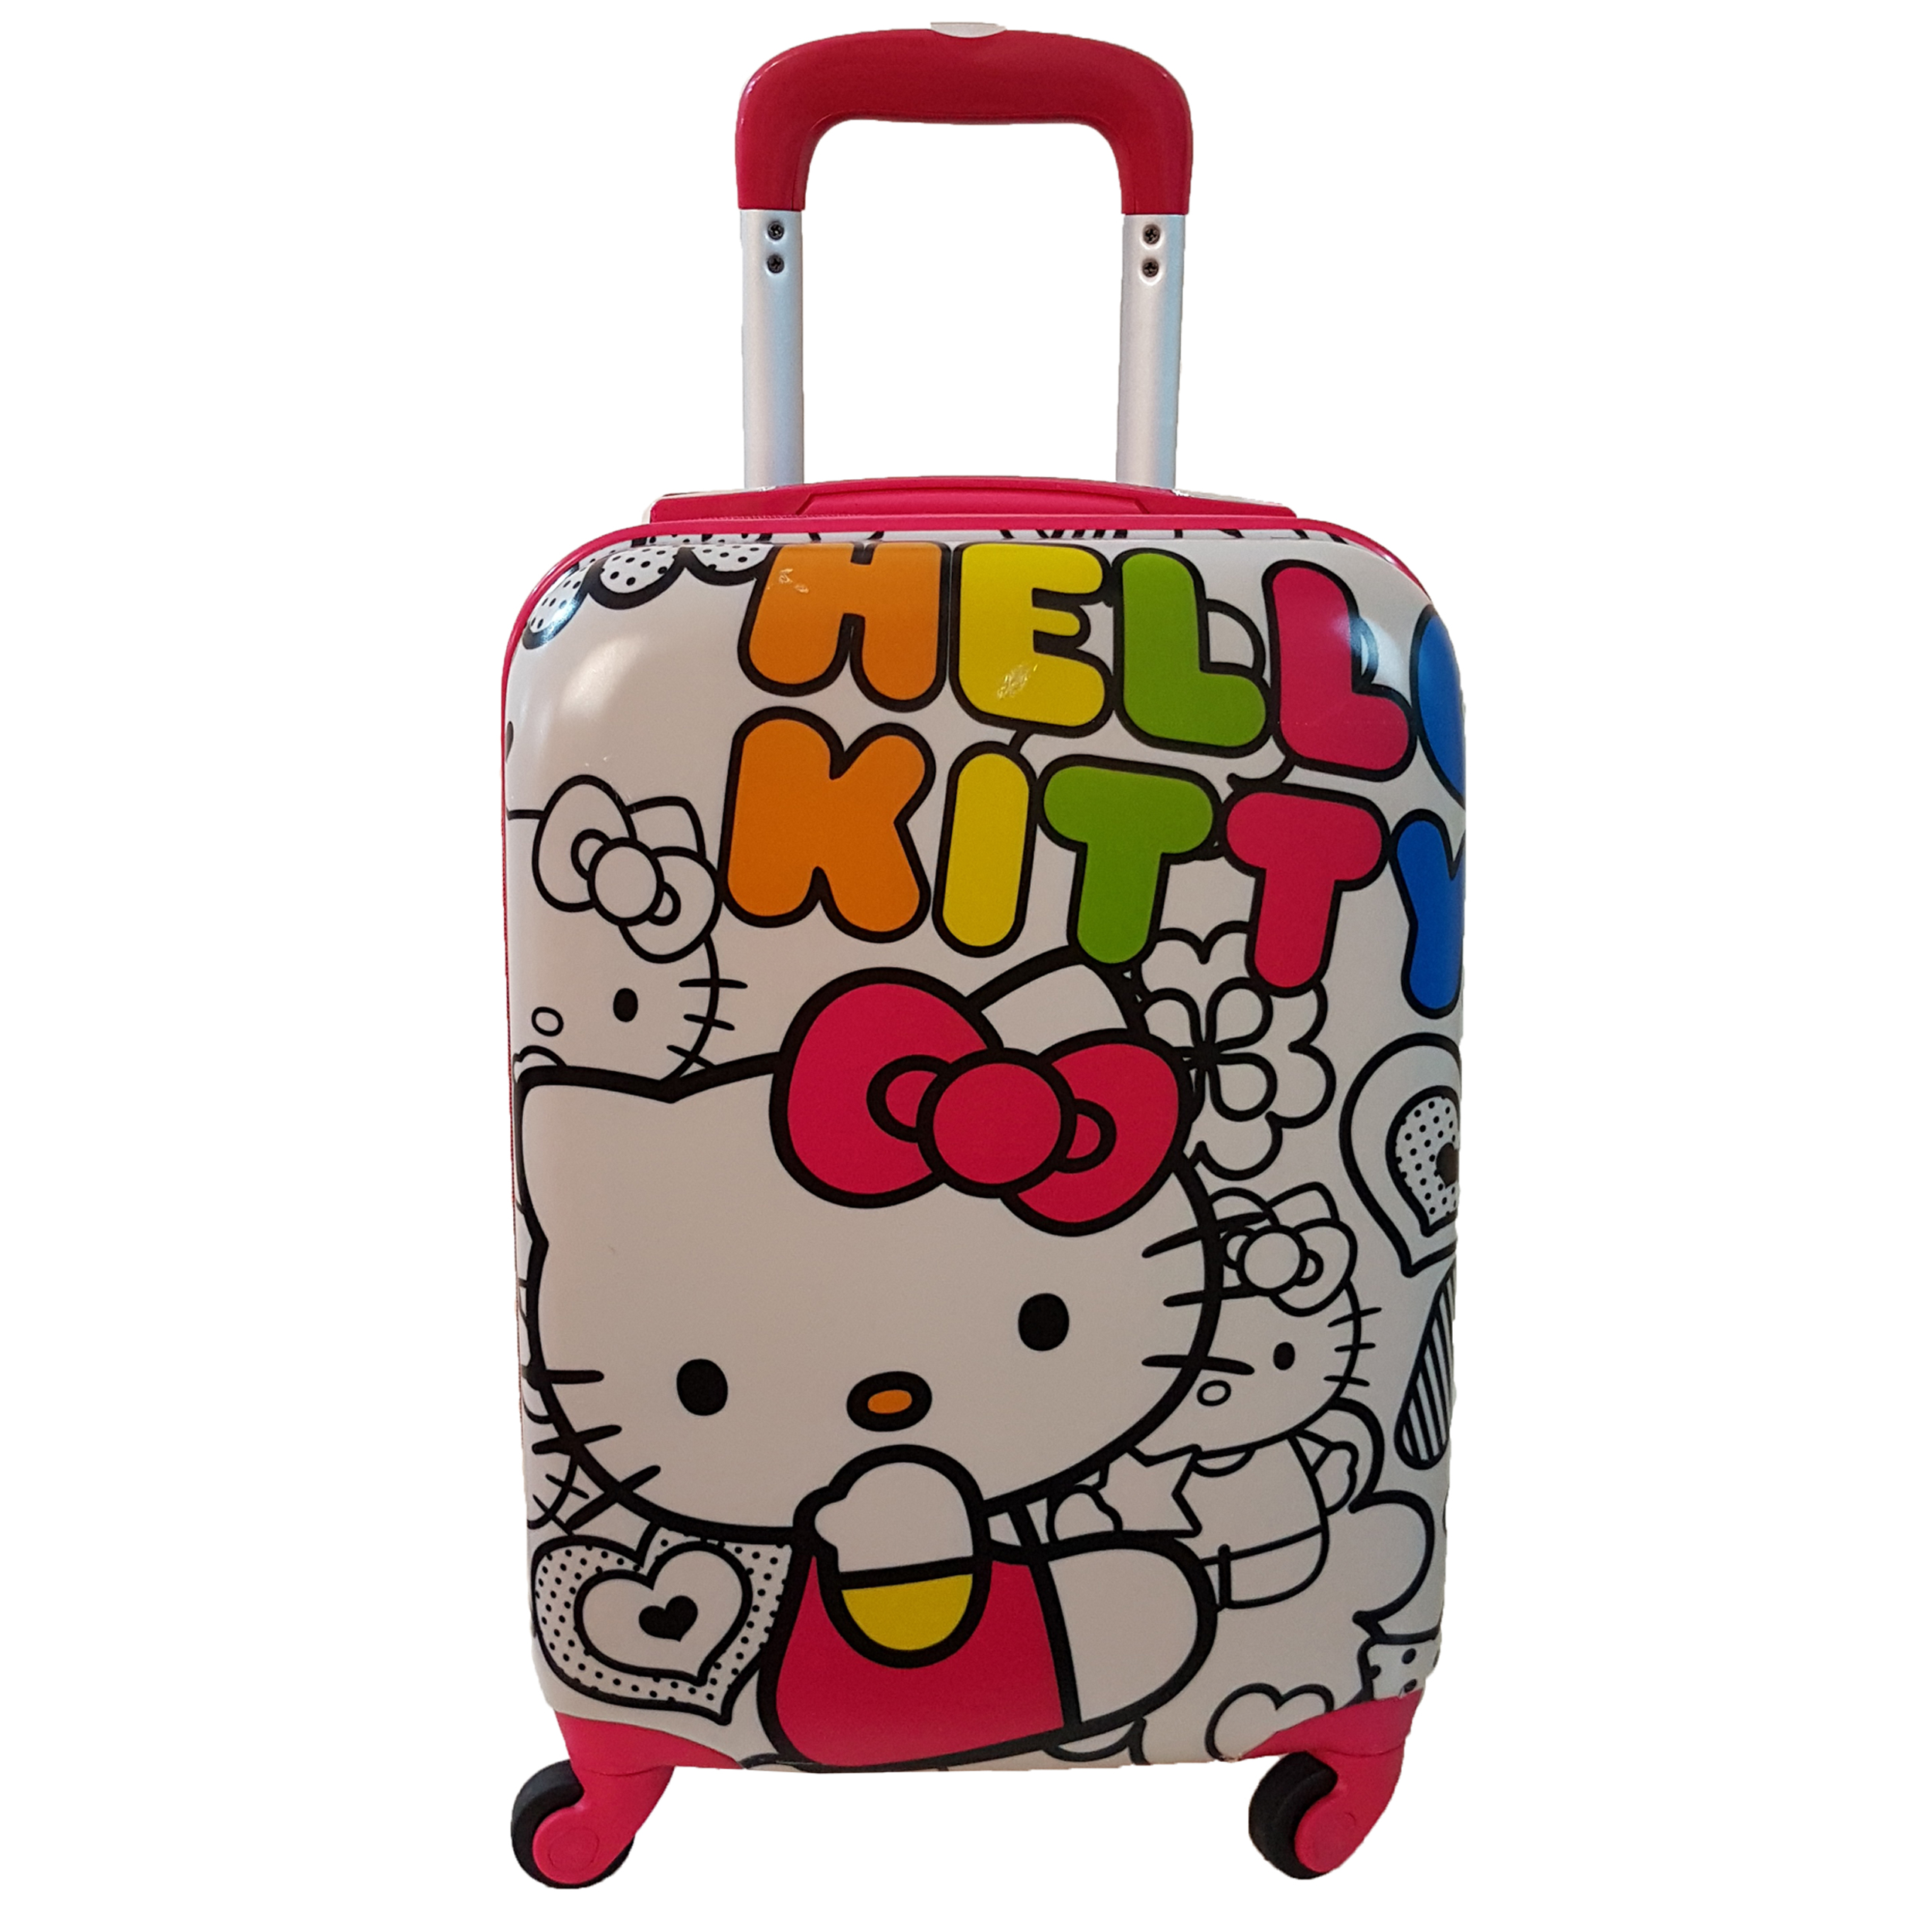 چمدان کودک مدل kity100